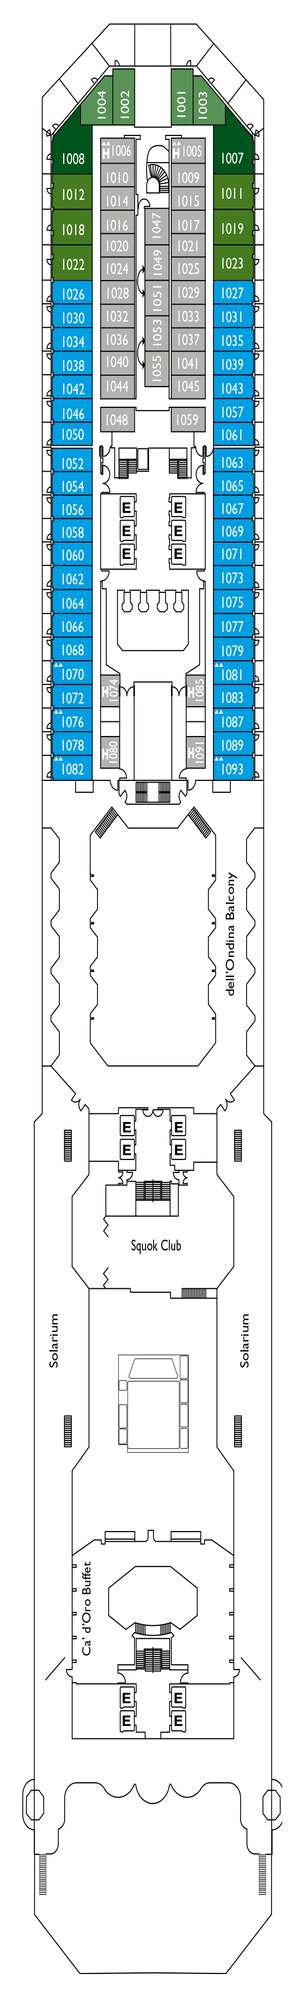 Deck plan for Costa Favolosa